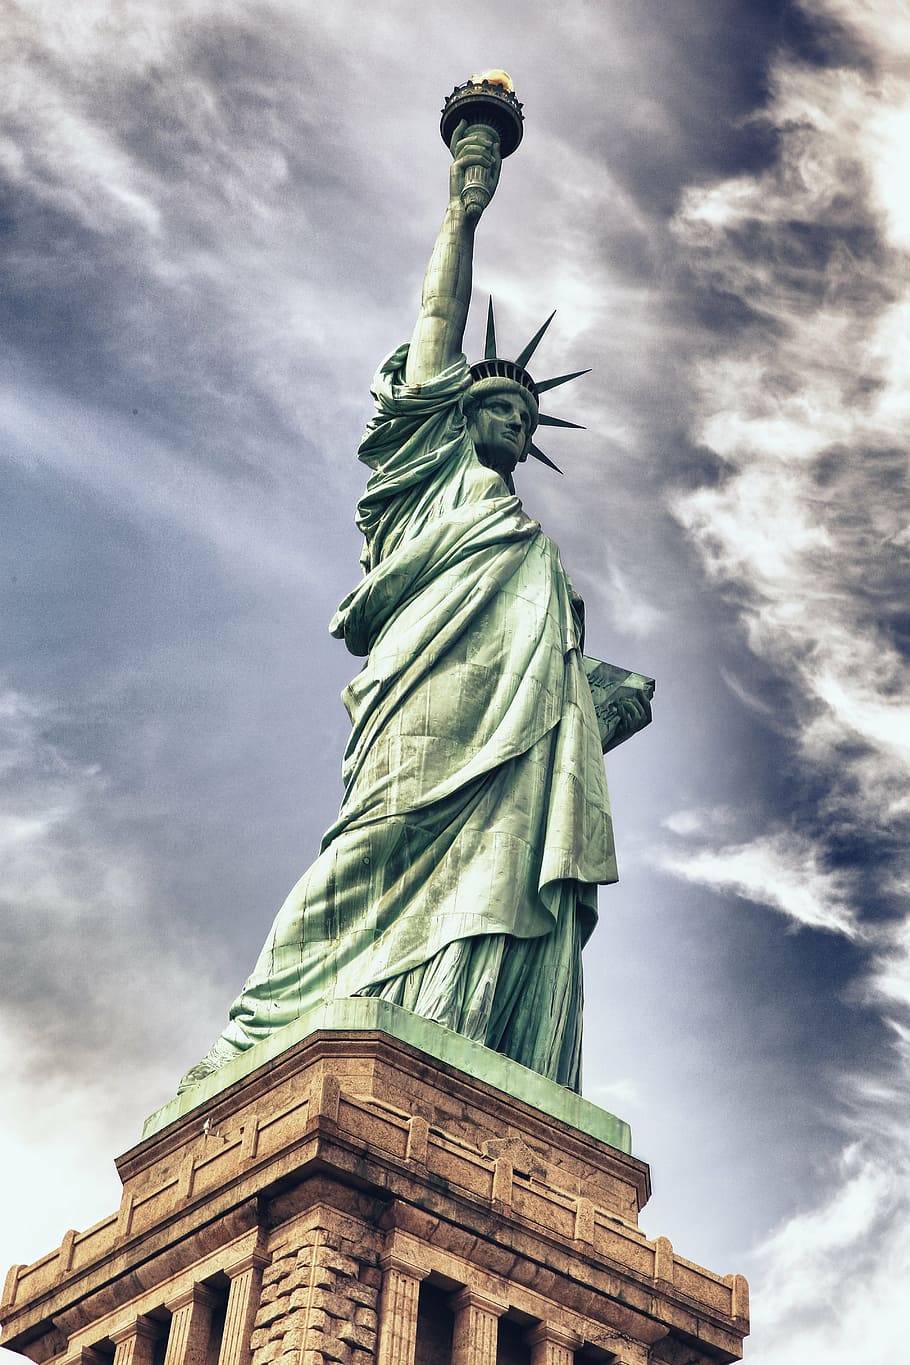 Statue Of Liberty Sky 1080p 2k 4k 5k Hd Wallpapers Free Download Wallpaper Flare